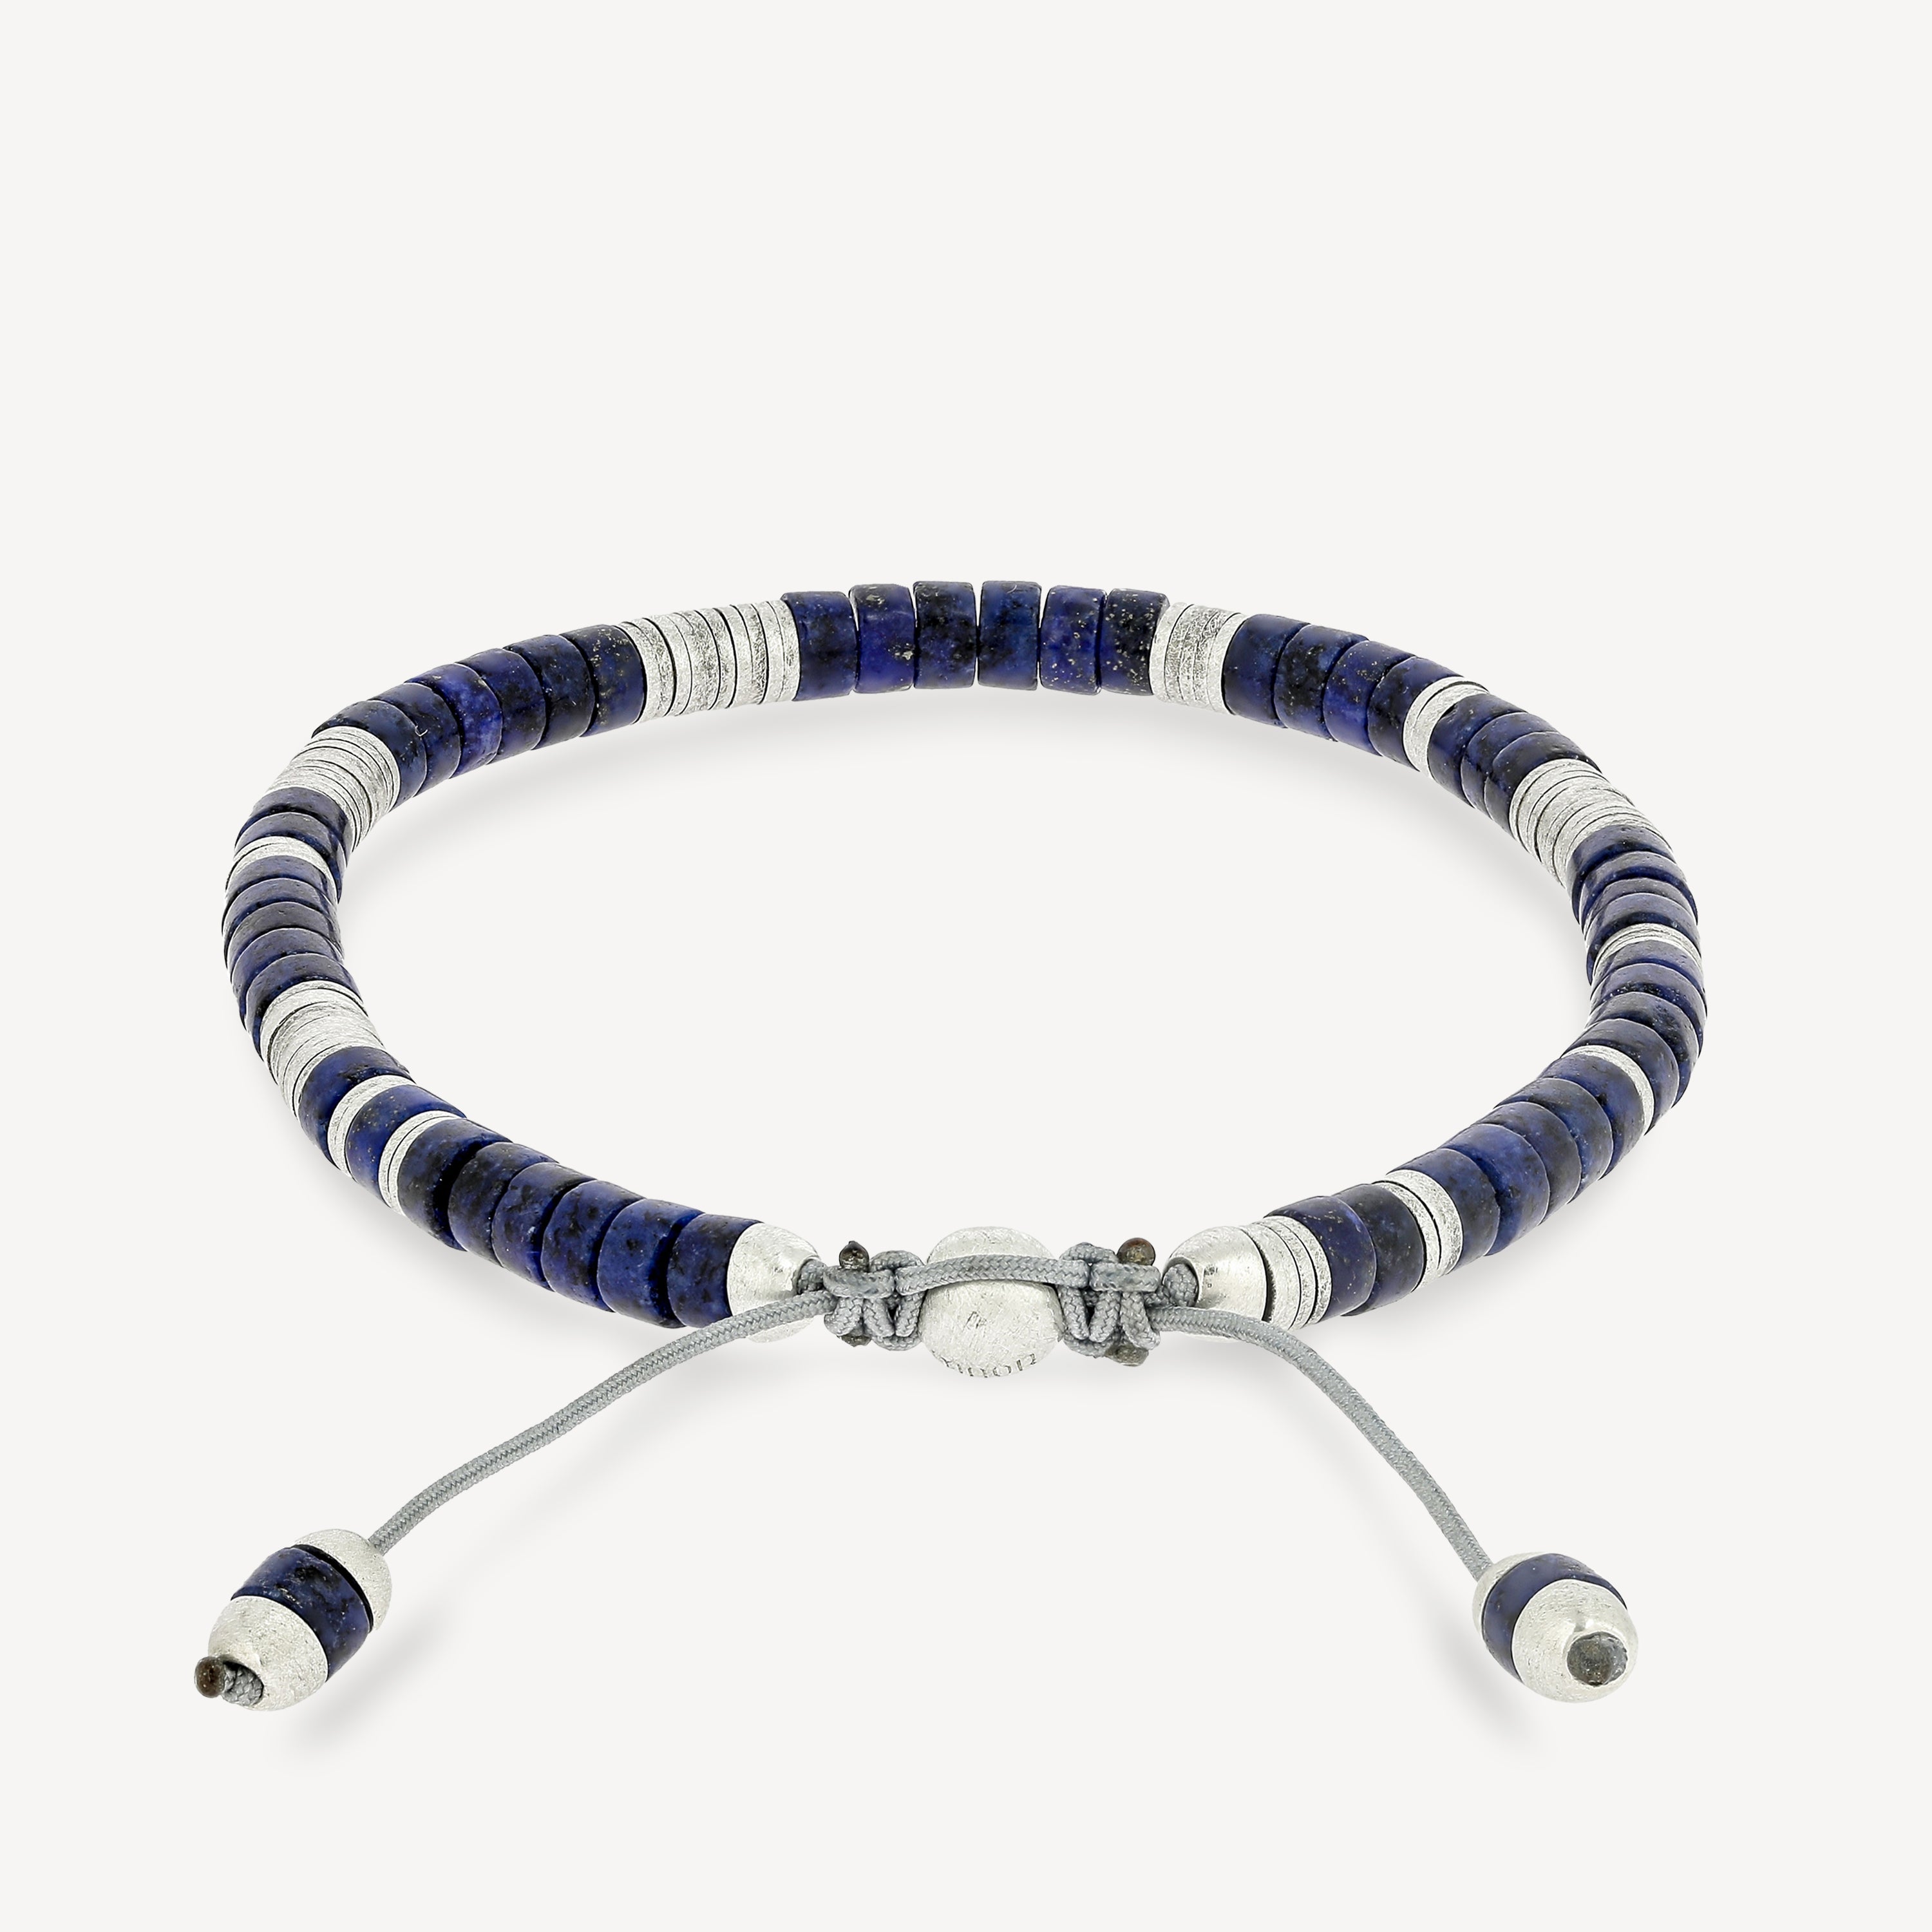 Natural Blue Lapis Lazuli Silver Gemstone Bracelet at Rs 2500/piece | लापीस  लाजुली ब्रेसलेट in Jaipur | ID: 2853269796533